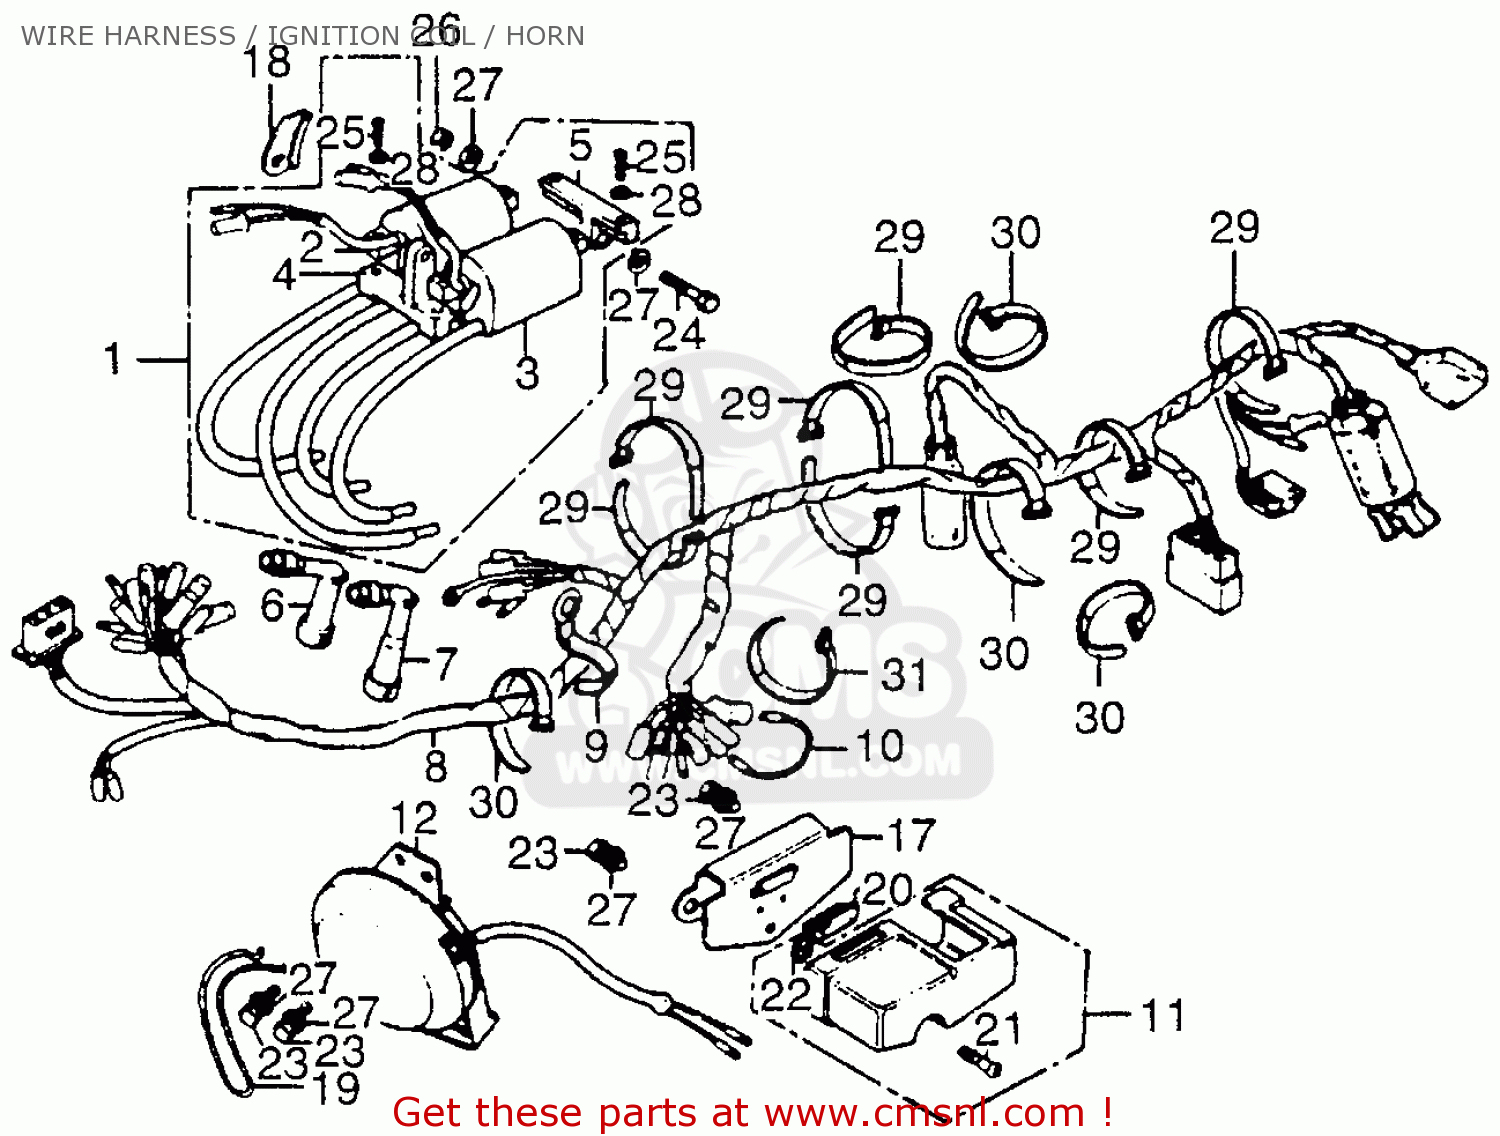 1977 Honda Cb550F Motorcycle Wiring Diagrams - Wiring Diagram Explained - Cb550 Wiring Diagram